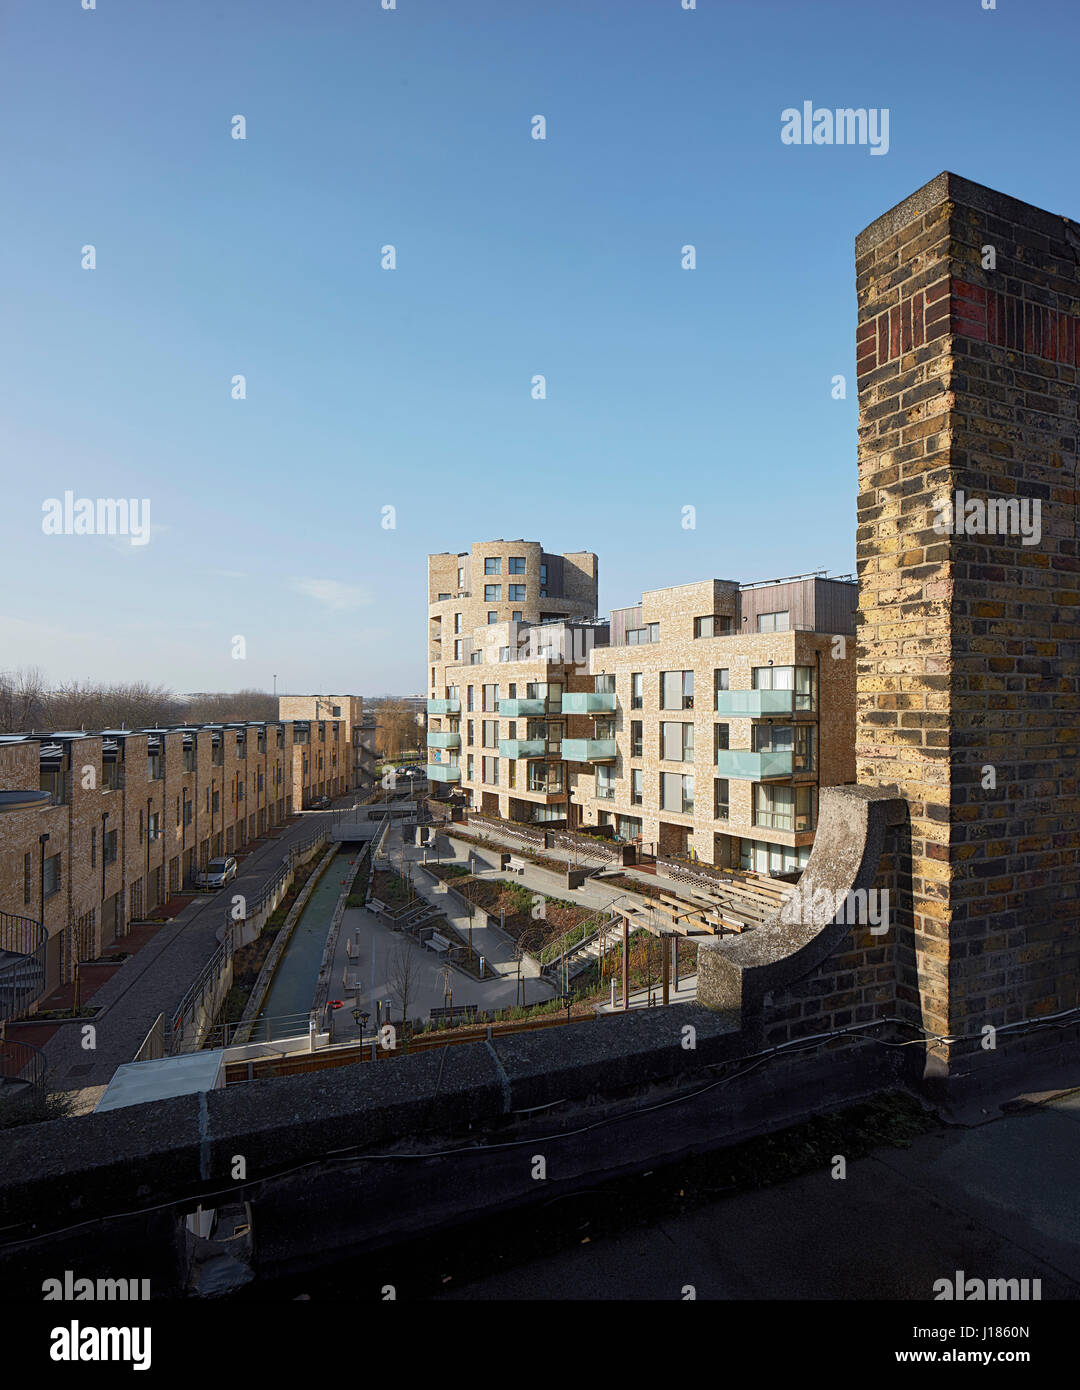 Elevated view across housing estate with communal garden. Stonebridge Park, London, United Kingdom. Architect: Cullinan Studio, 2016. Stock Photo